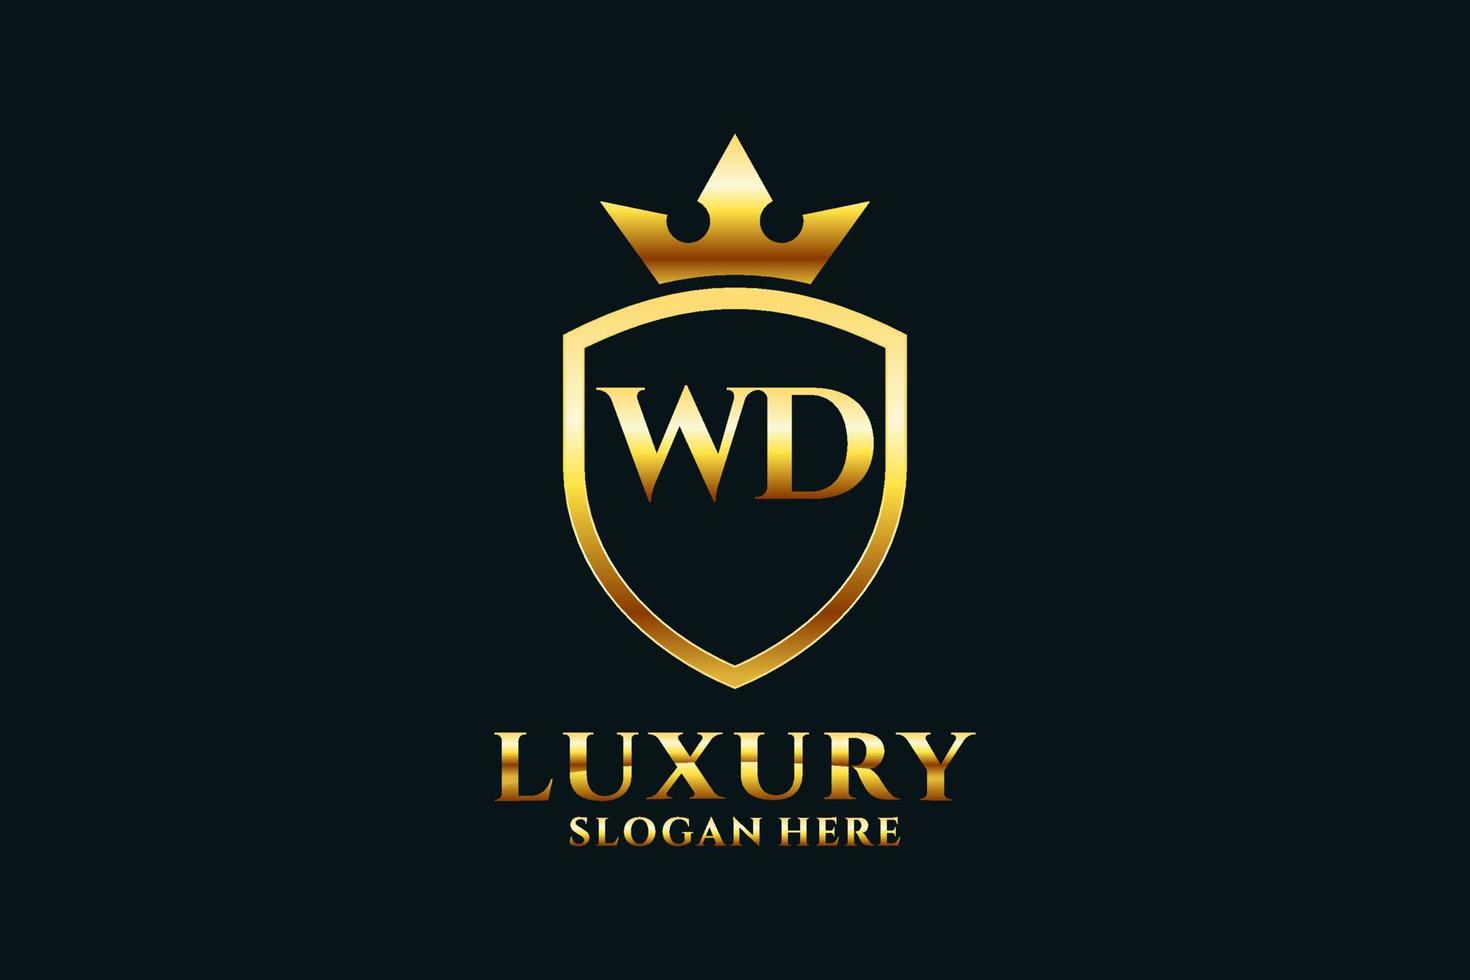 inicial wd elegante logotipo de monograma de luxo ou modelo de crachá com pergaminhos e coroa real - perfeito para projetos de marca luxuosos vetor